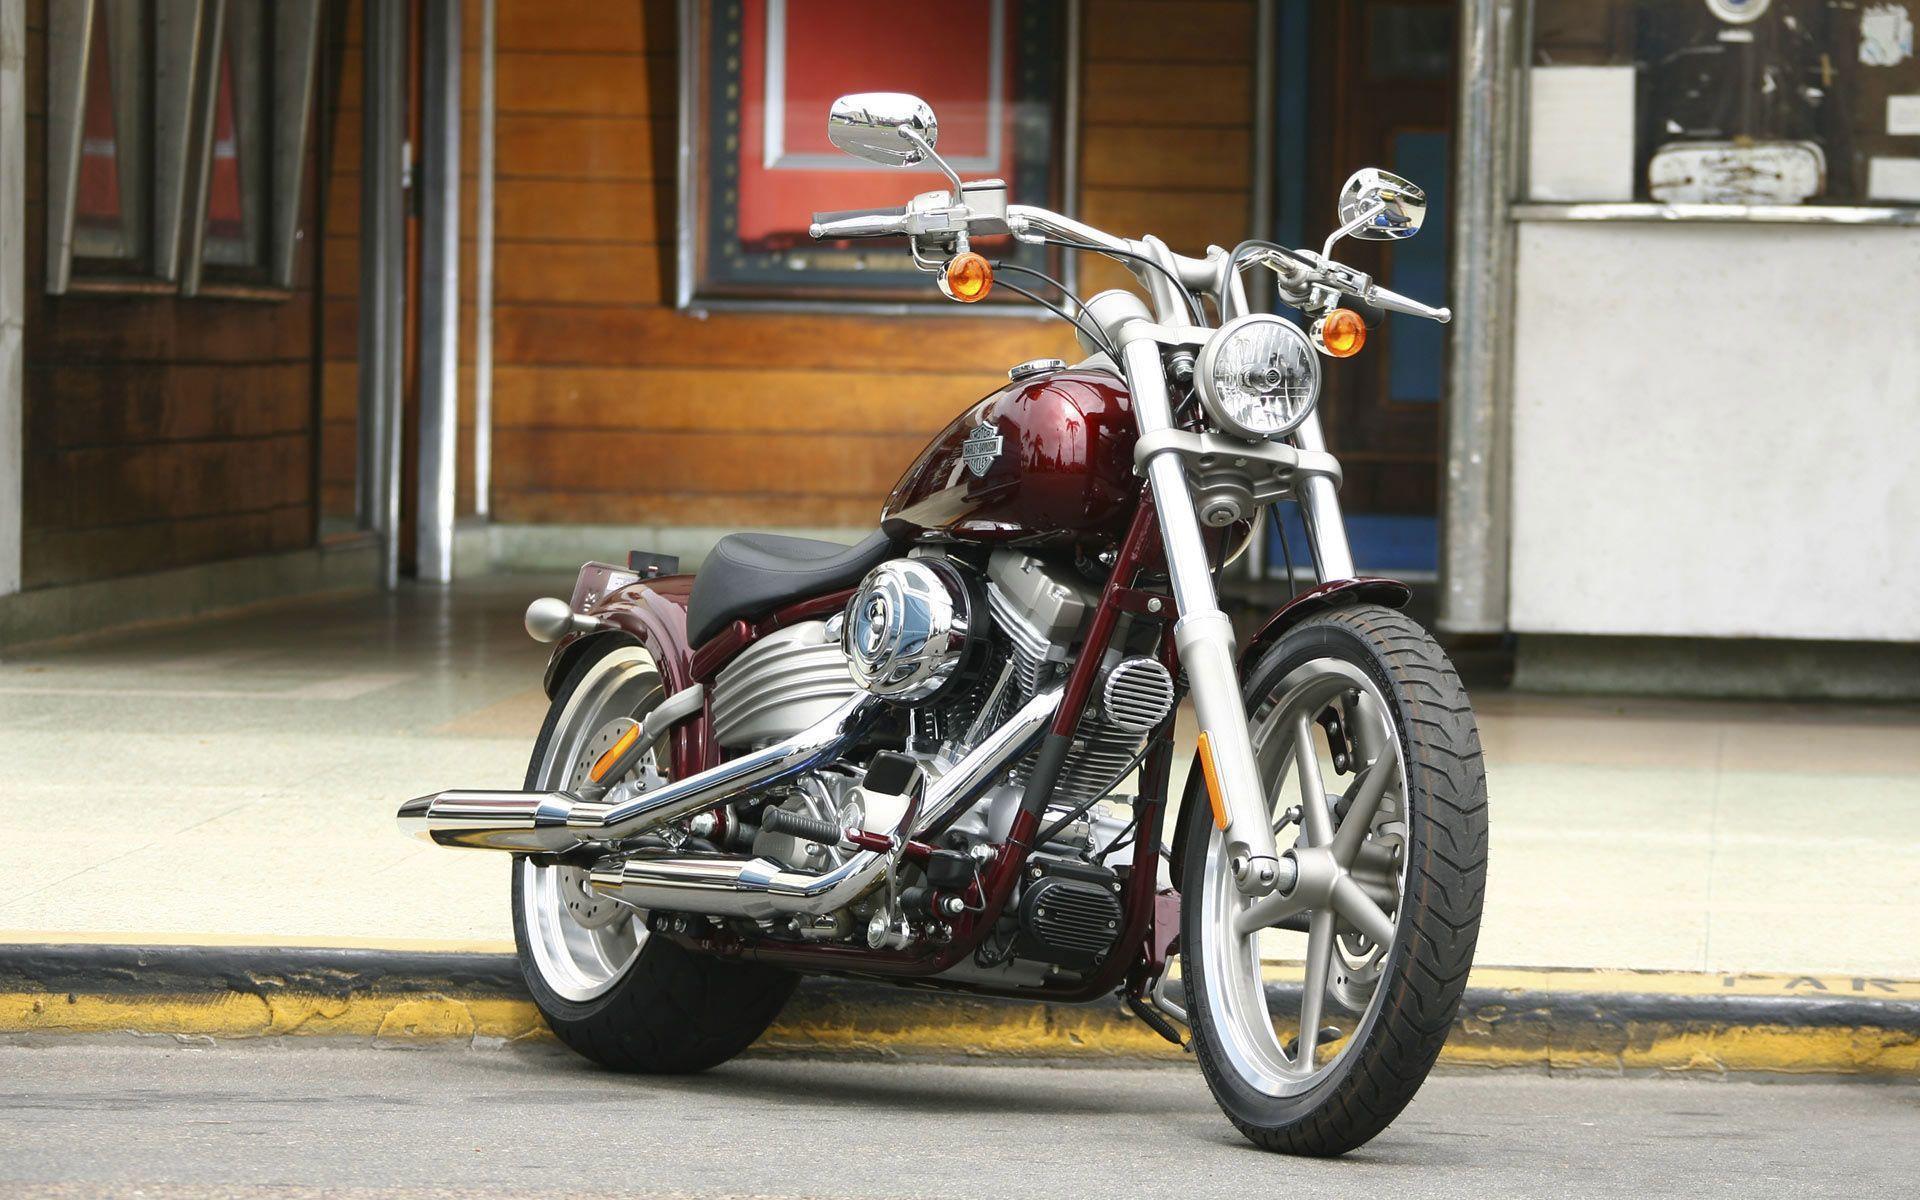 Motorcycle Harley Davidson wallpaper and image